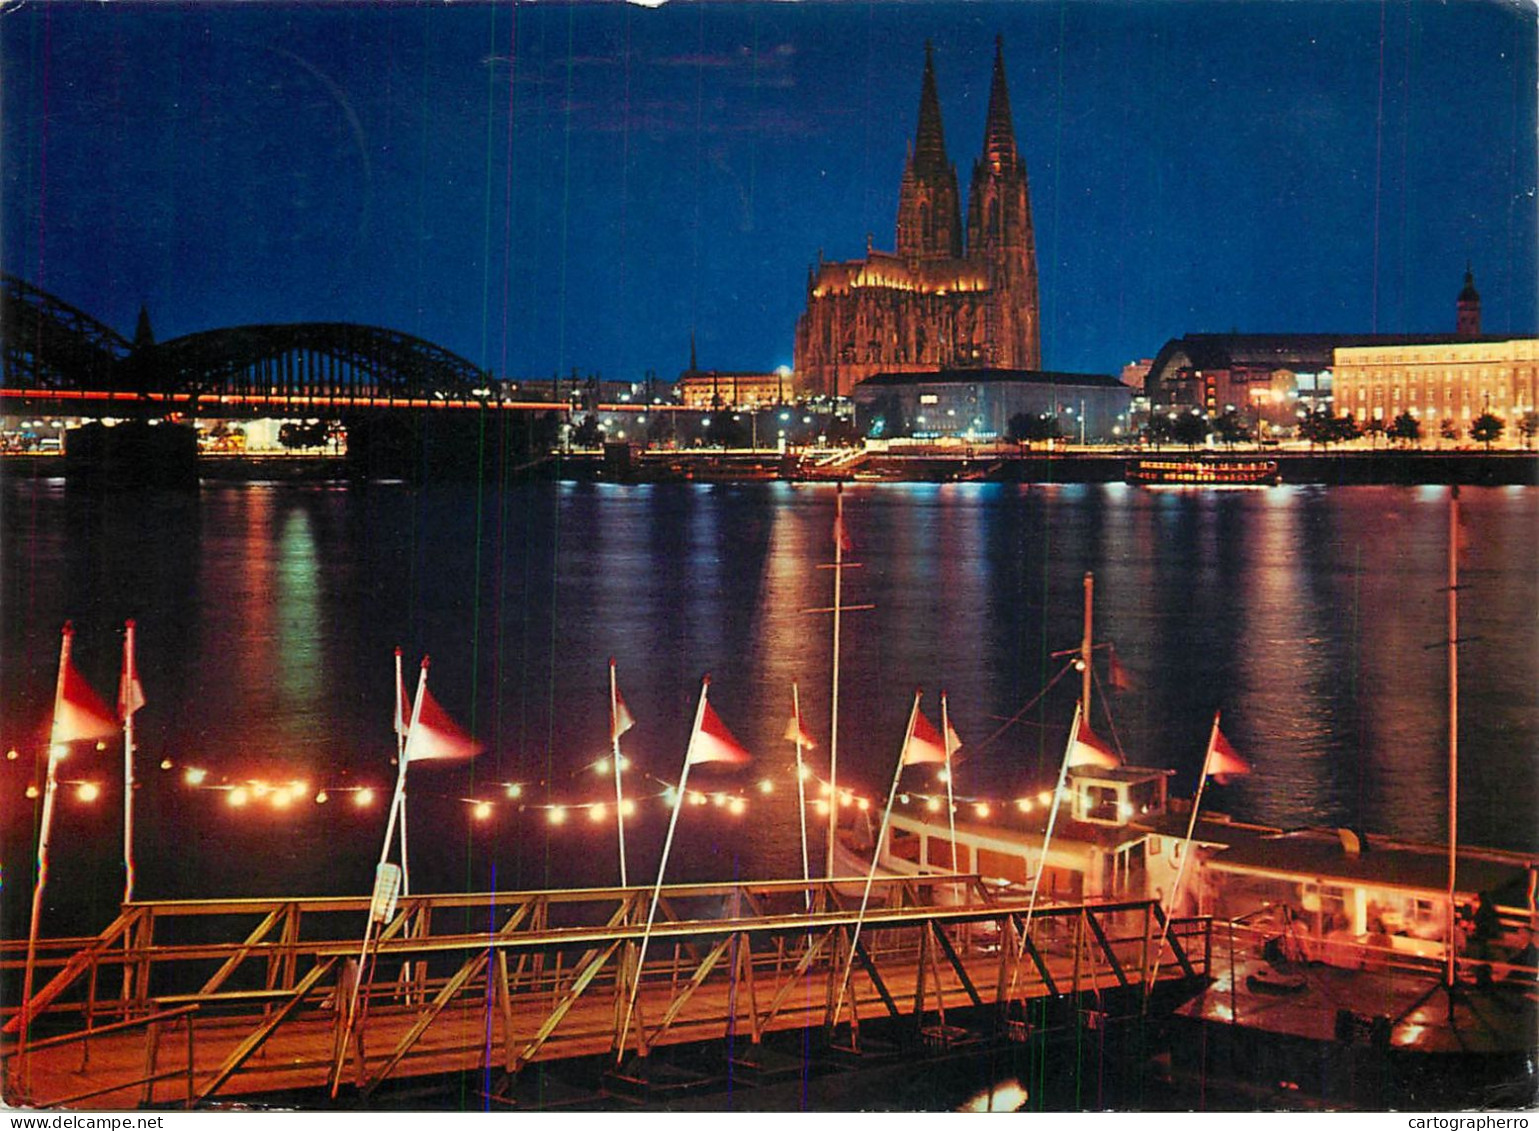 Navigation Sailing Vessels & Boats Themed Postcard Koln Am Rhein Dom Und Hohenzollernbrucke - Segelboote